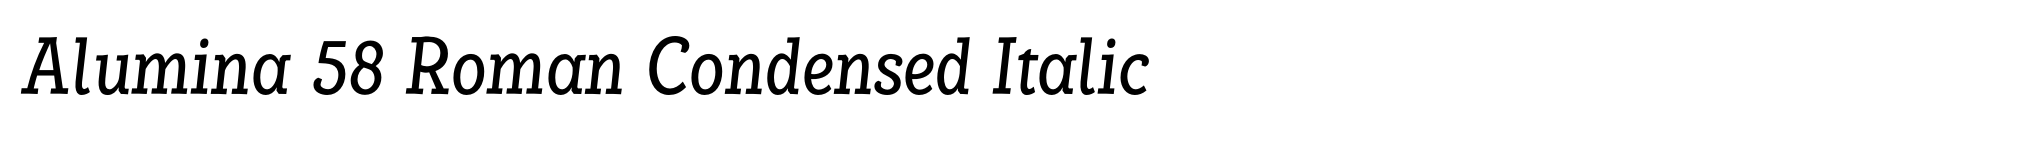 Alumina 58 Roman Condensed Italic image